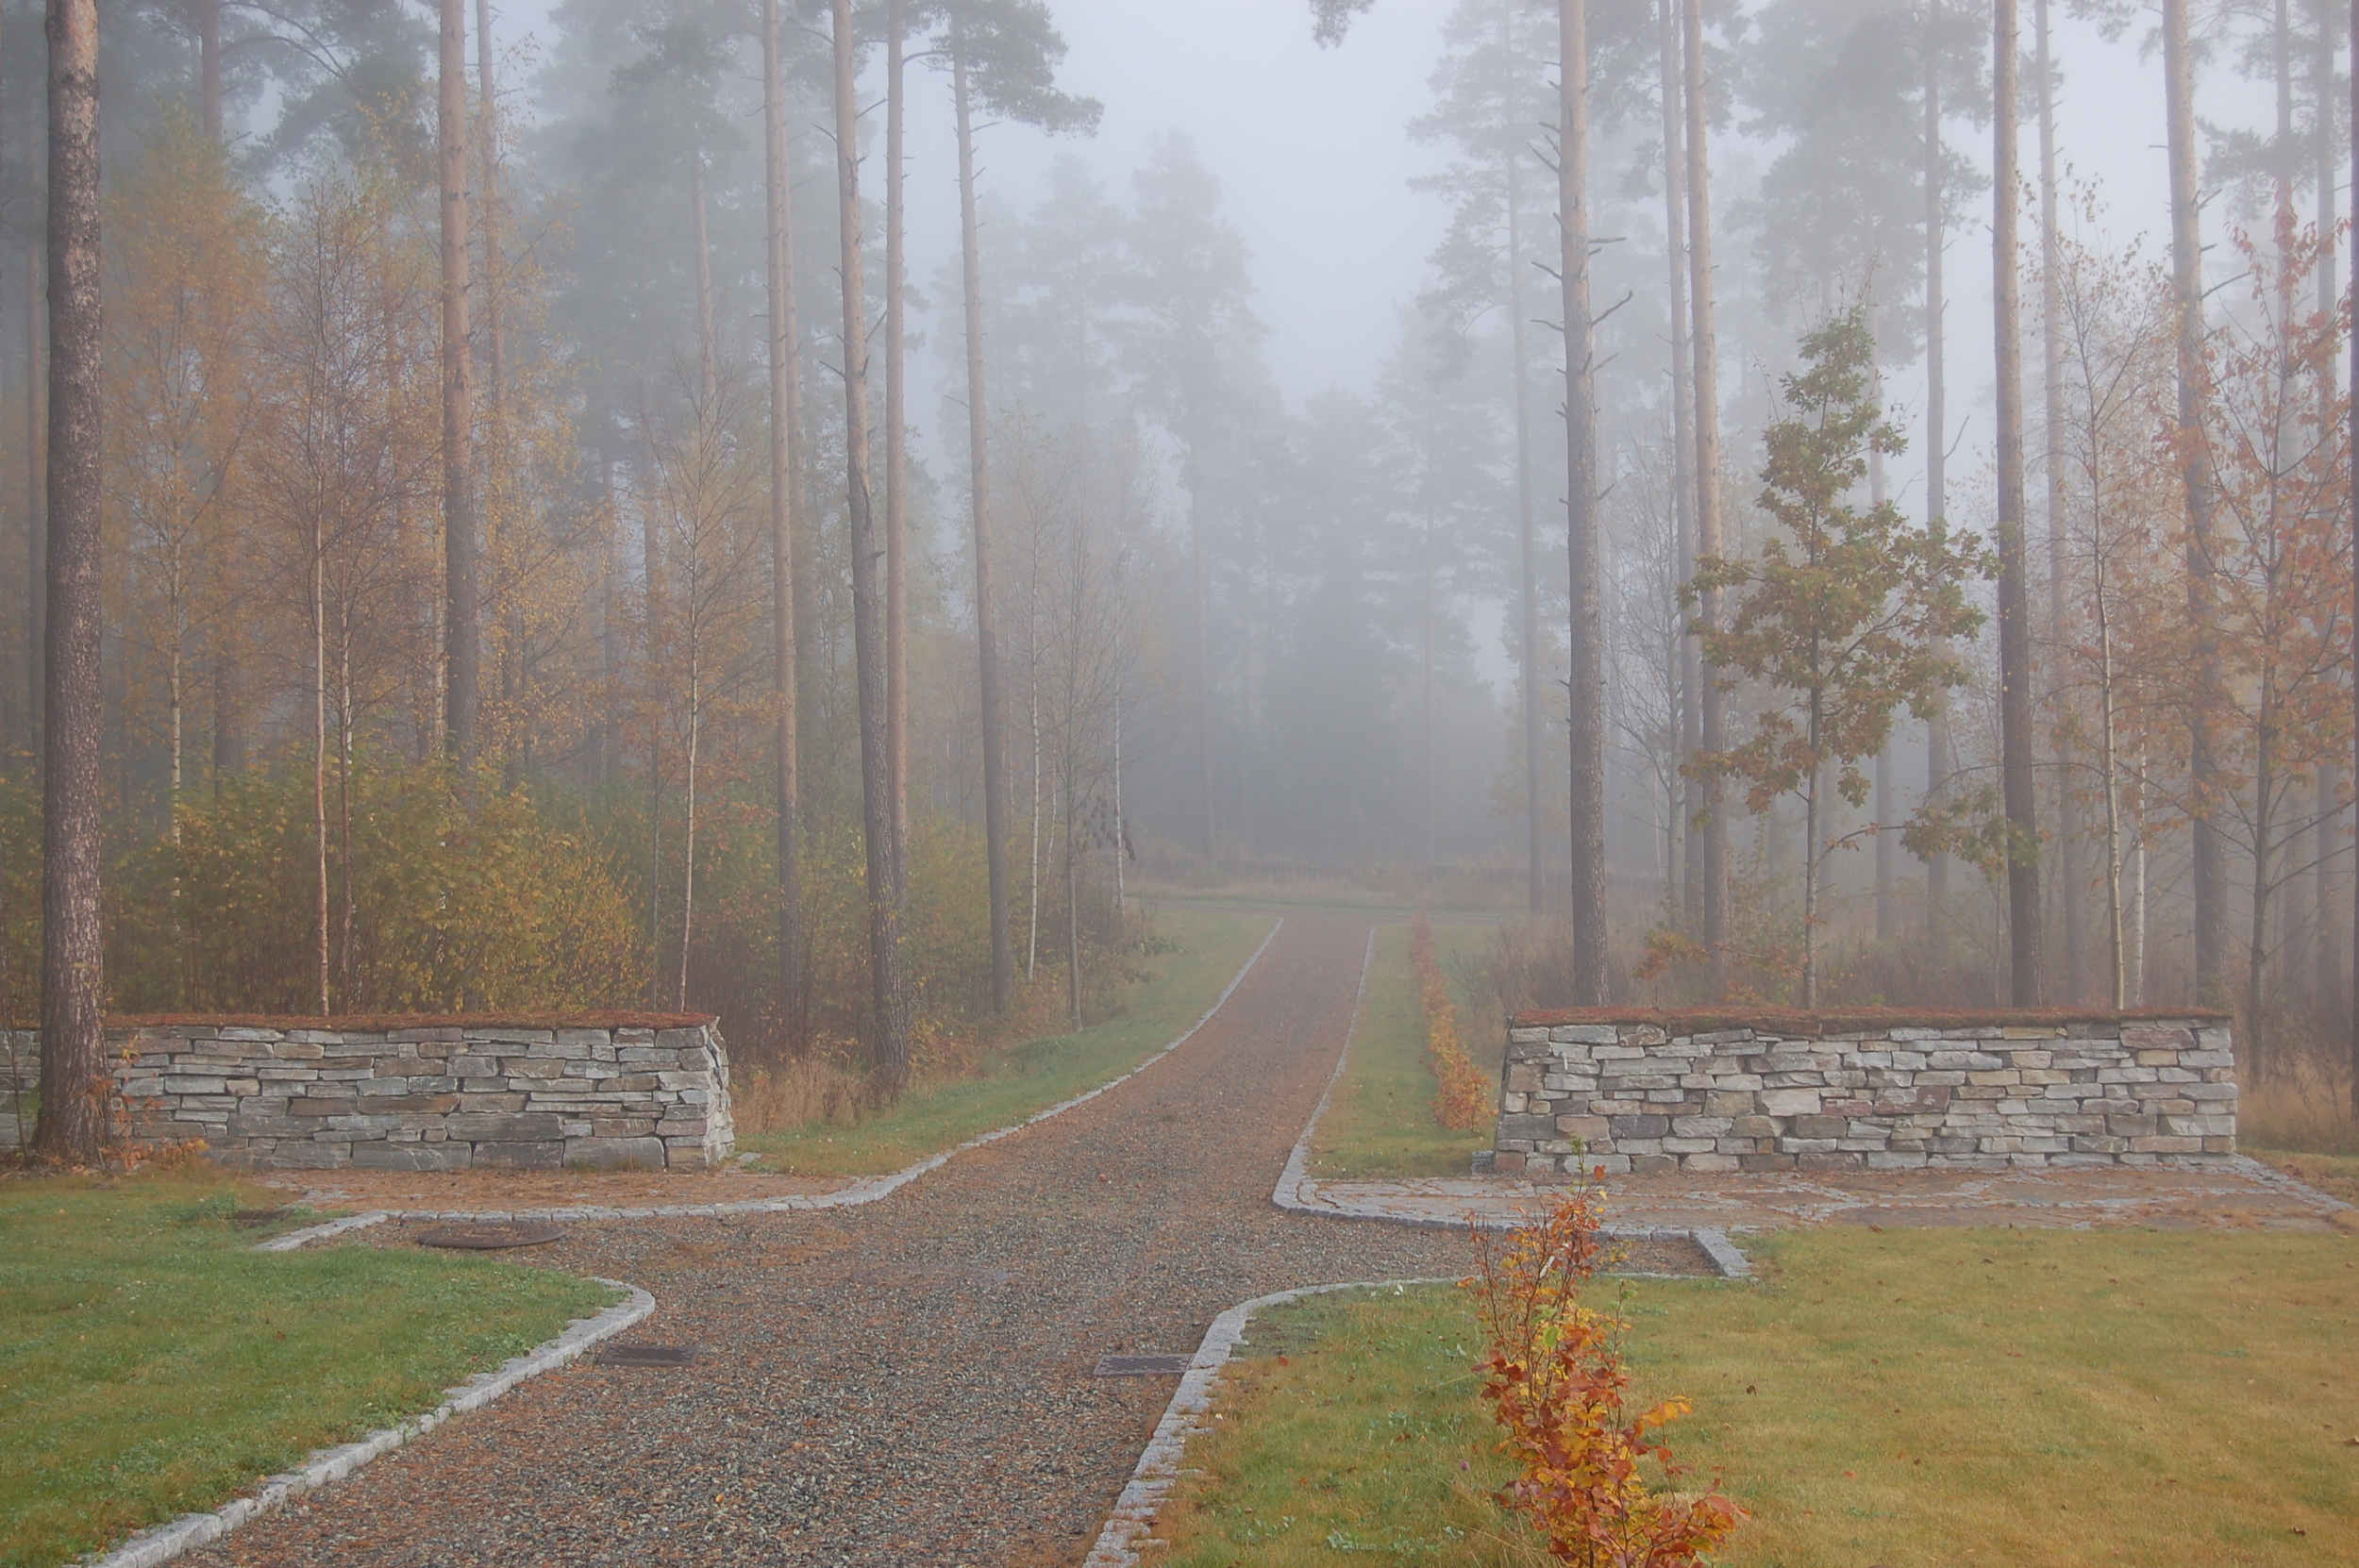   Furuskogen preger kirkegården - Eidanger kirkegård, Porsgrunn  